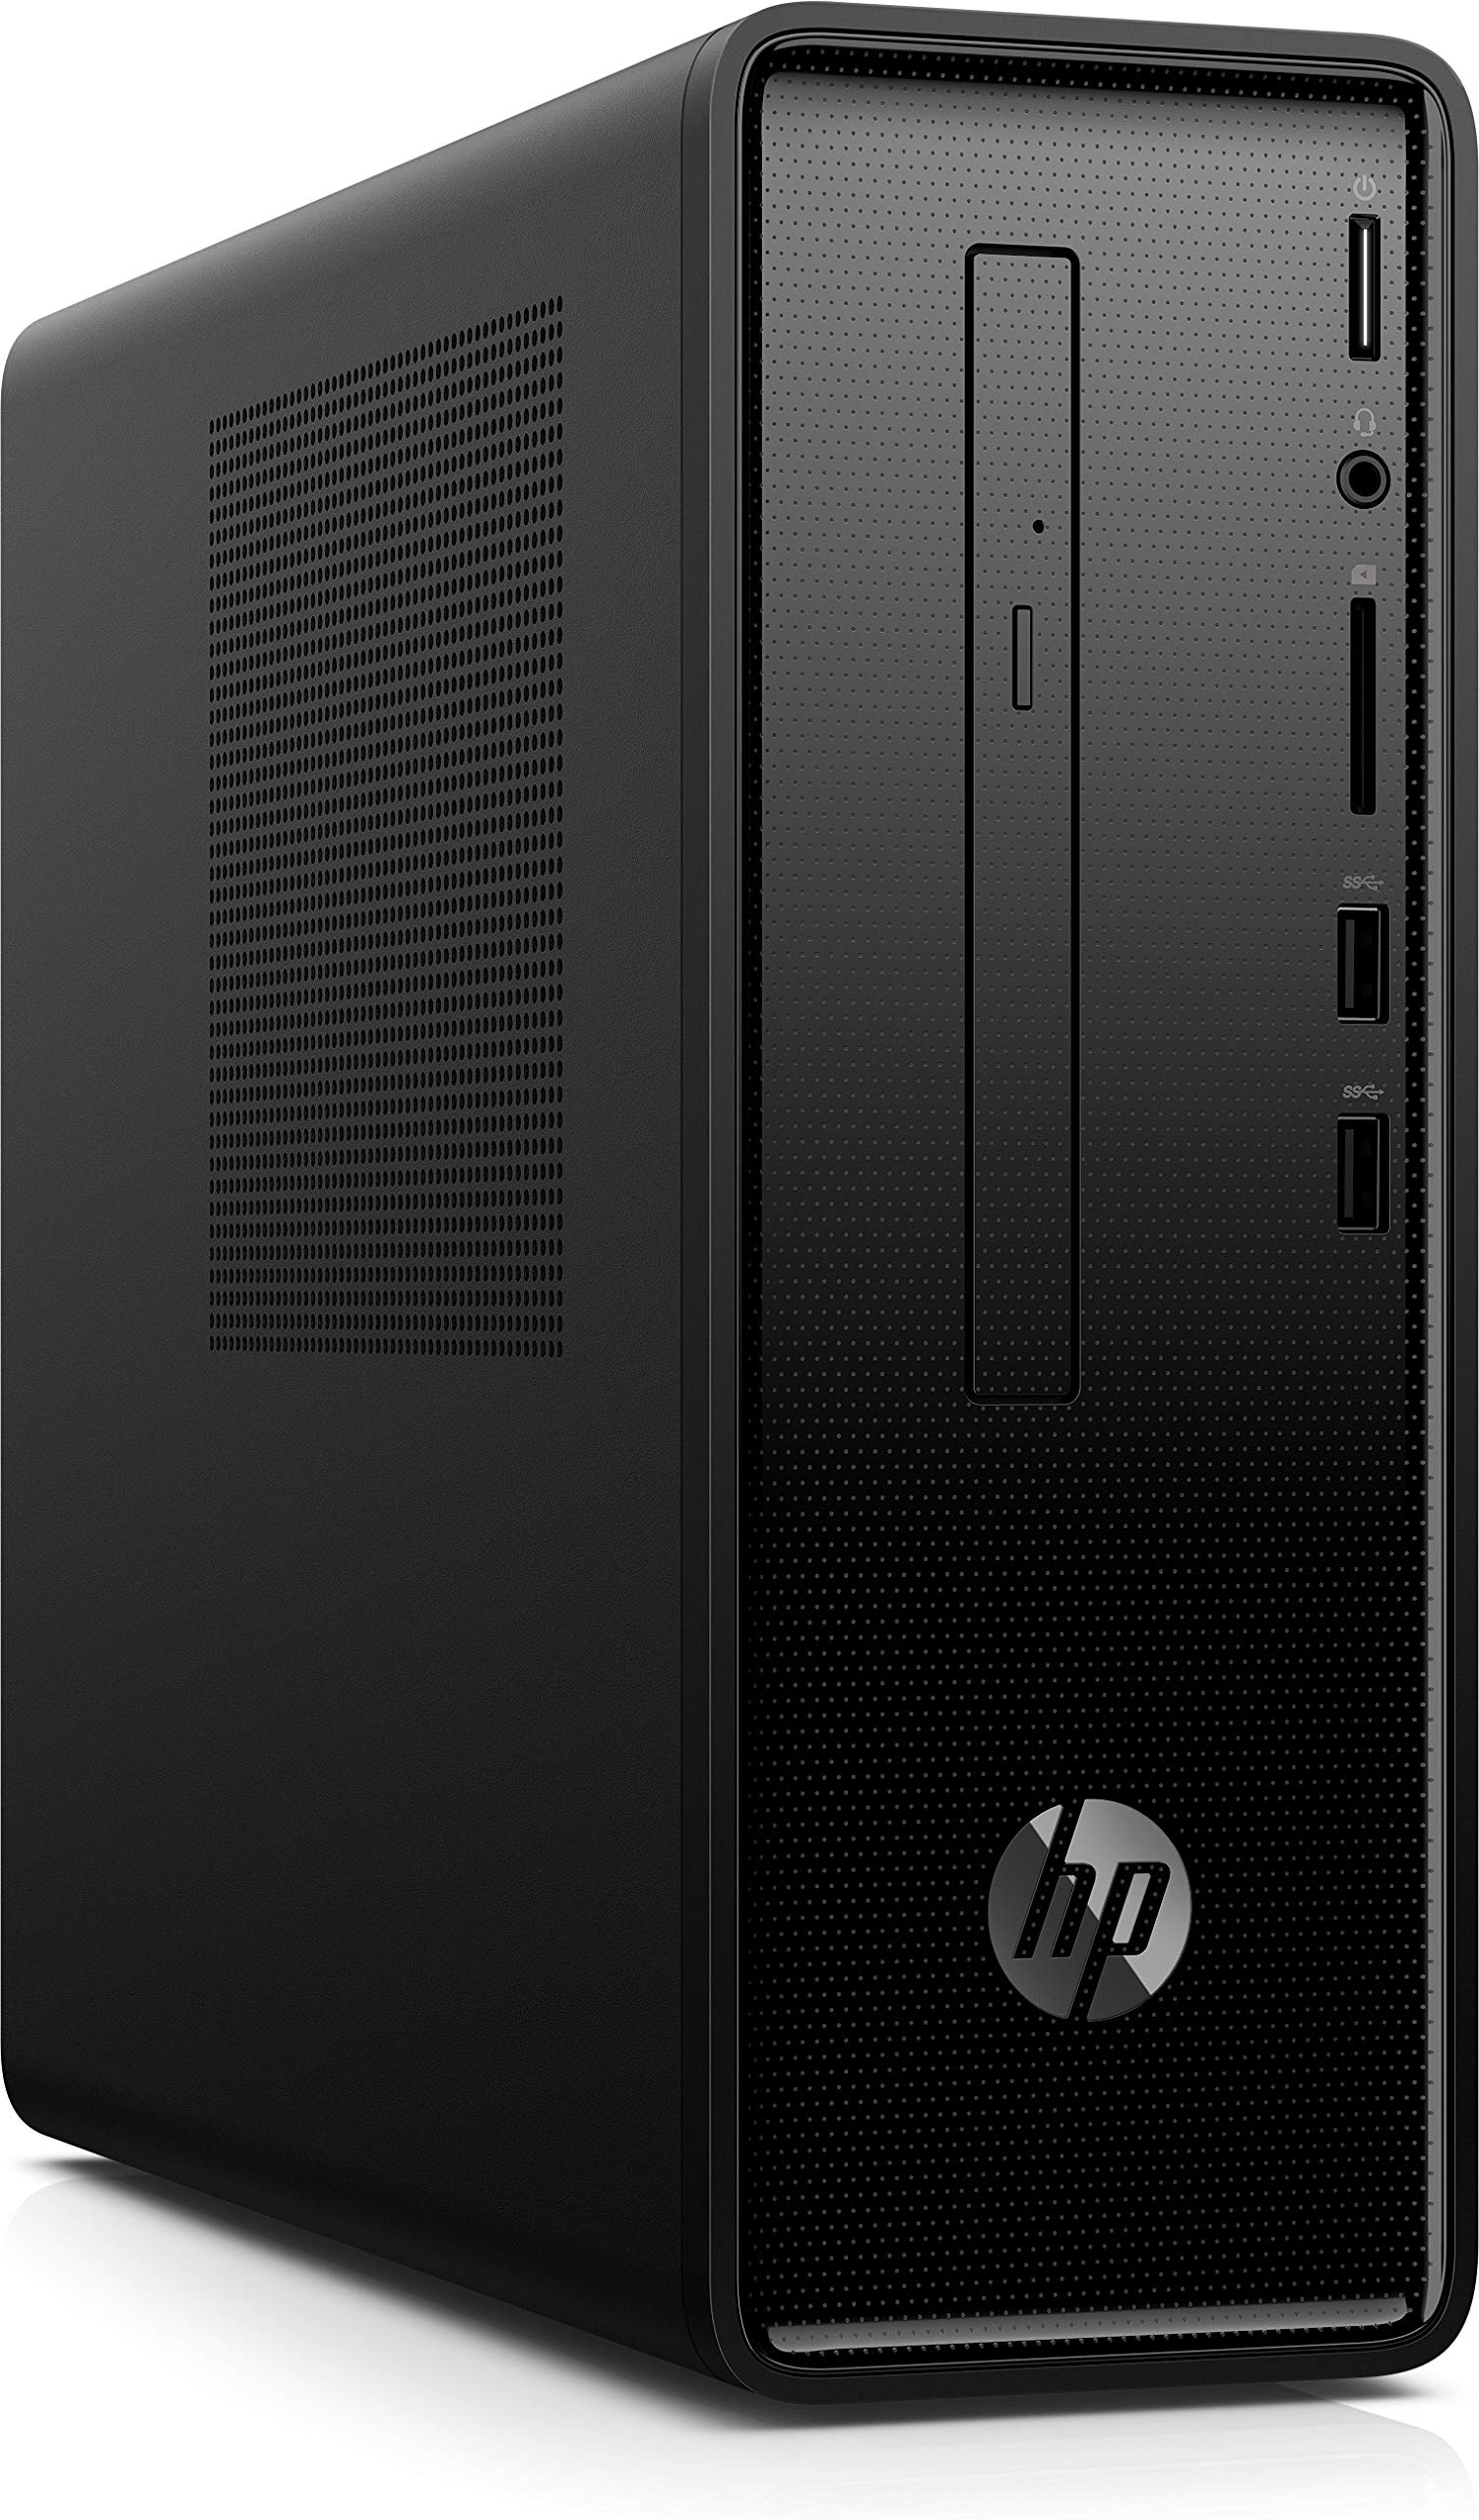 HP 290-p0043w Slim Celeron G4900 3.1GHz 4GB RAM 500GB HDD Win 10 Home Black